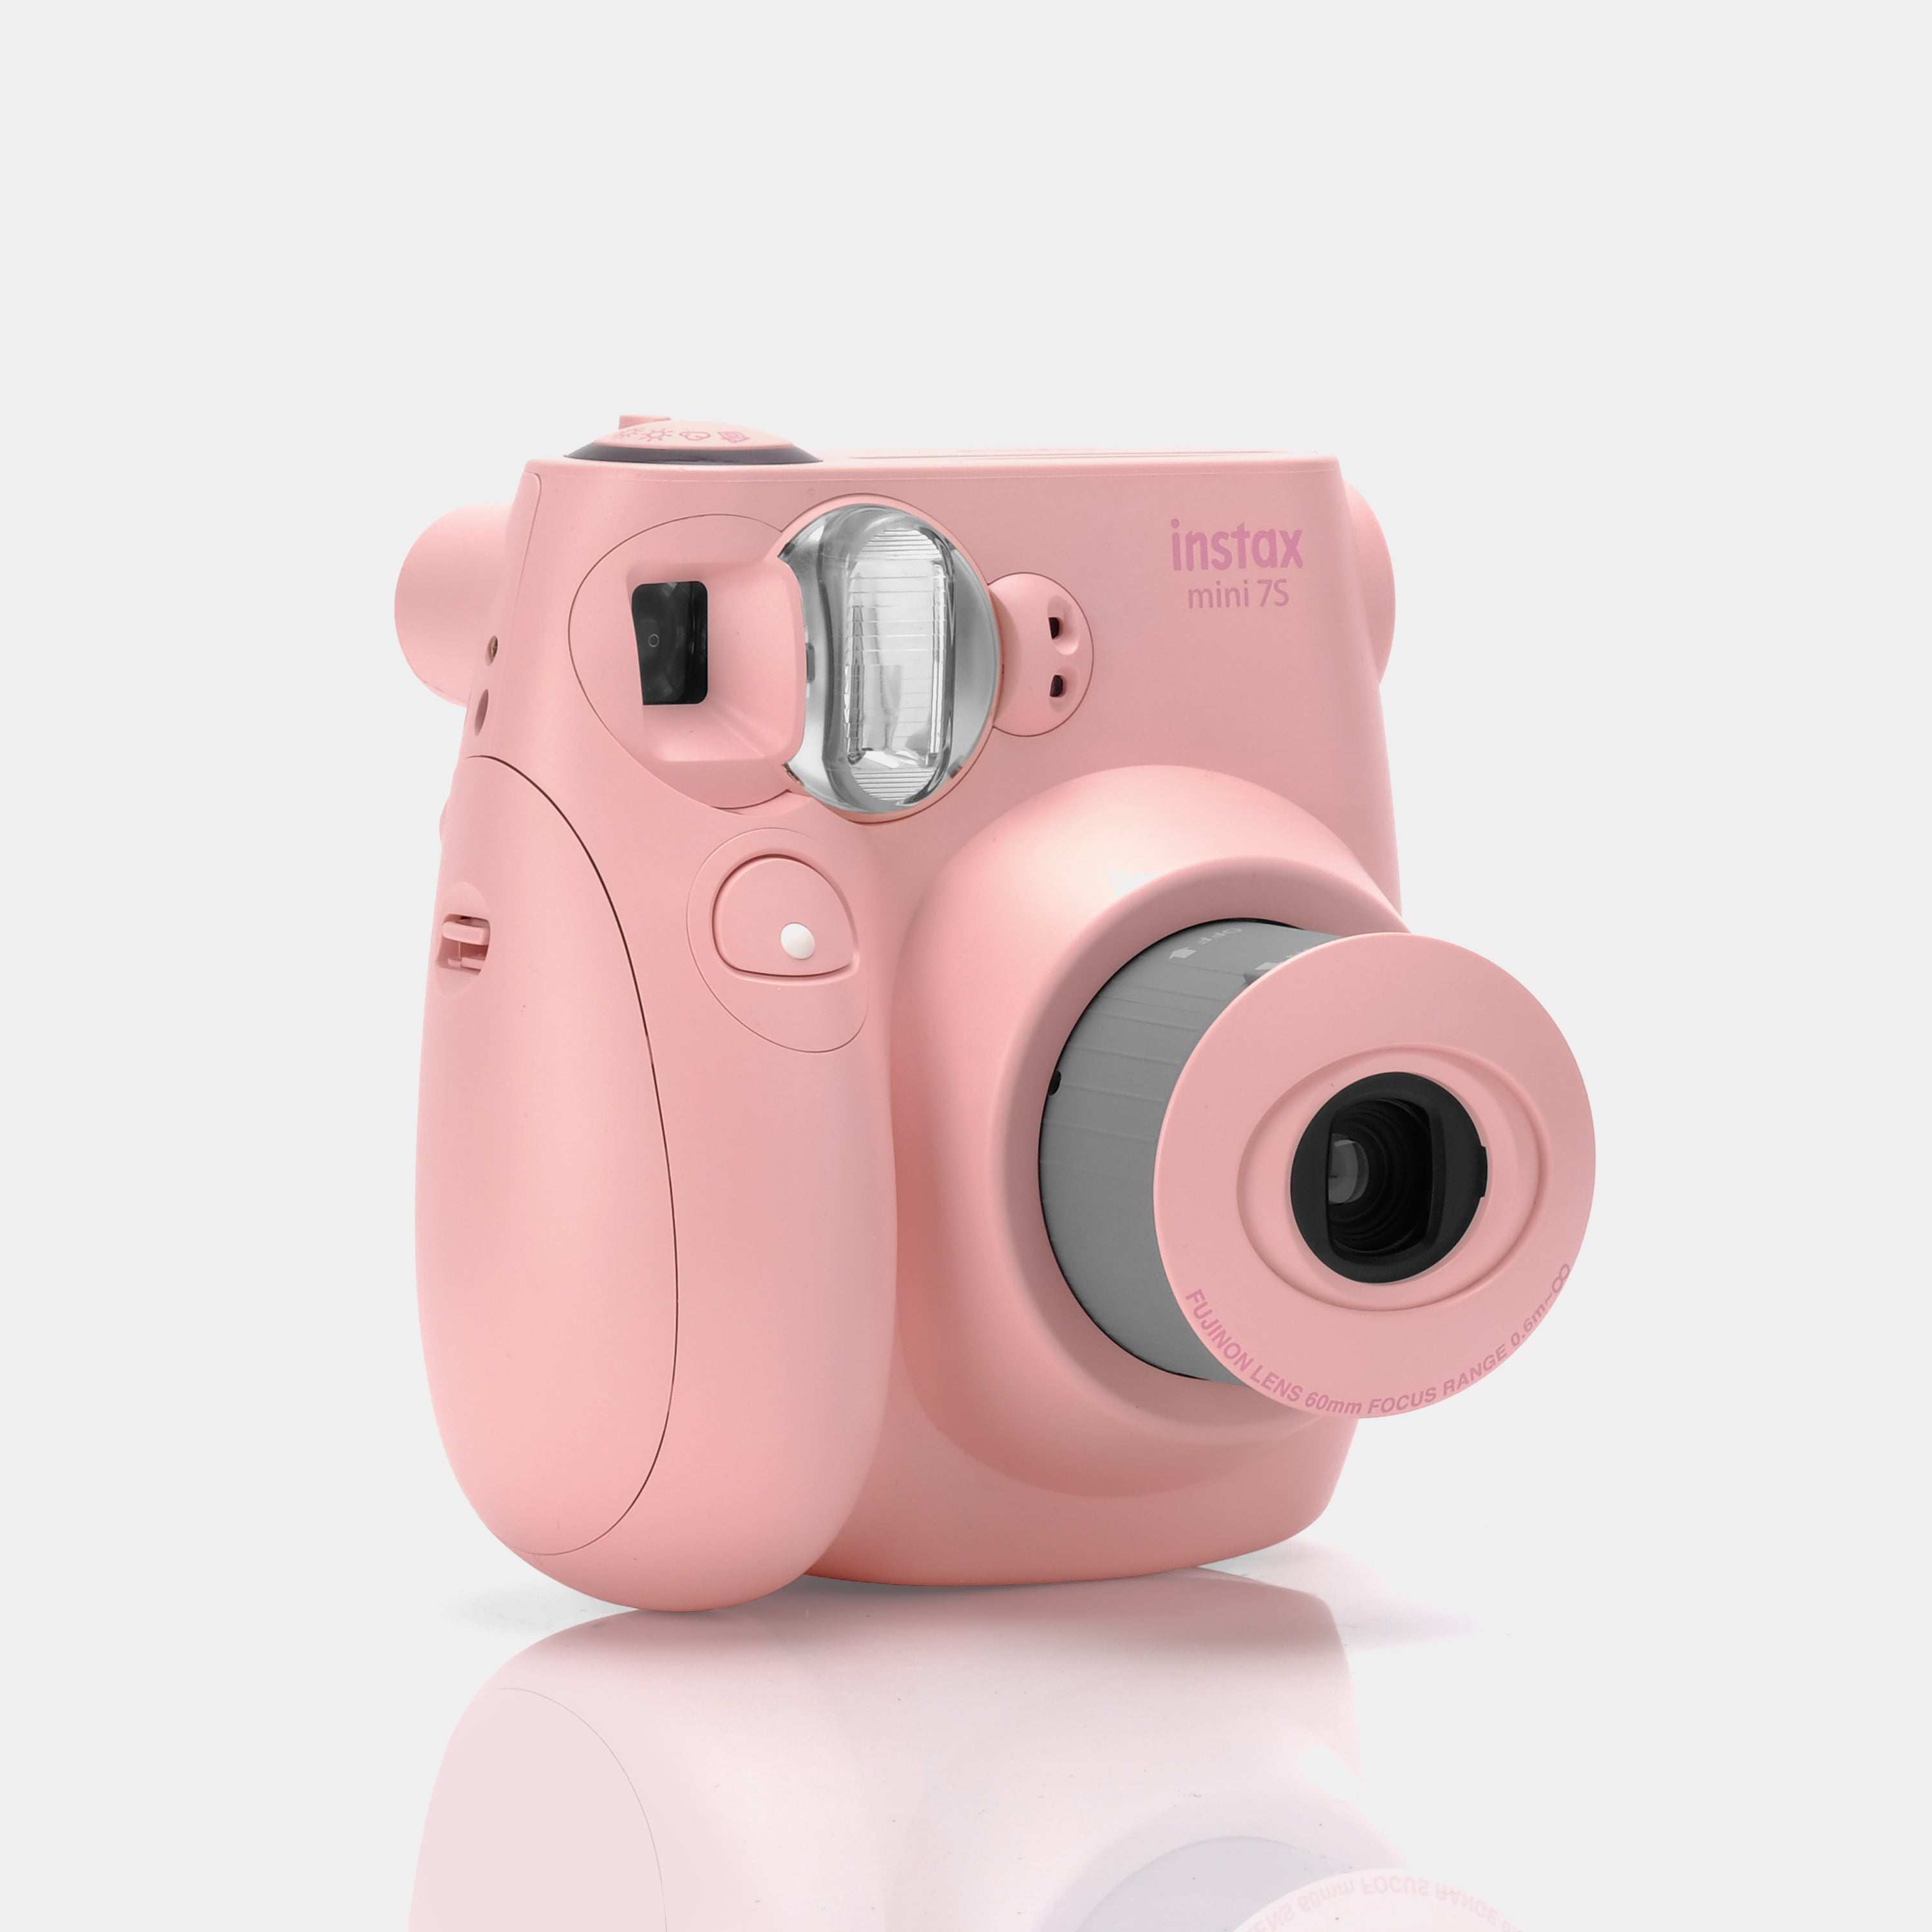 Fujifilm Instax Mini 7S Light Pink Instant Film Camera With Light Pink Bag - Refurbished